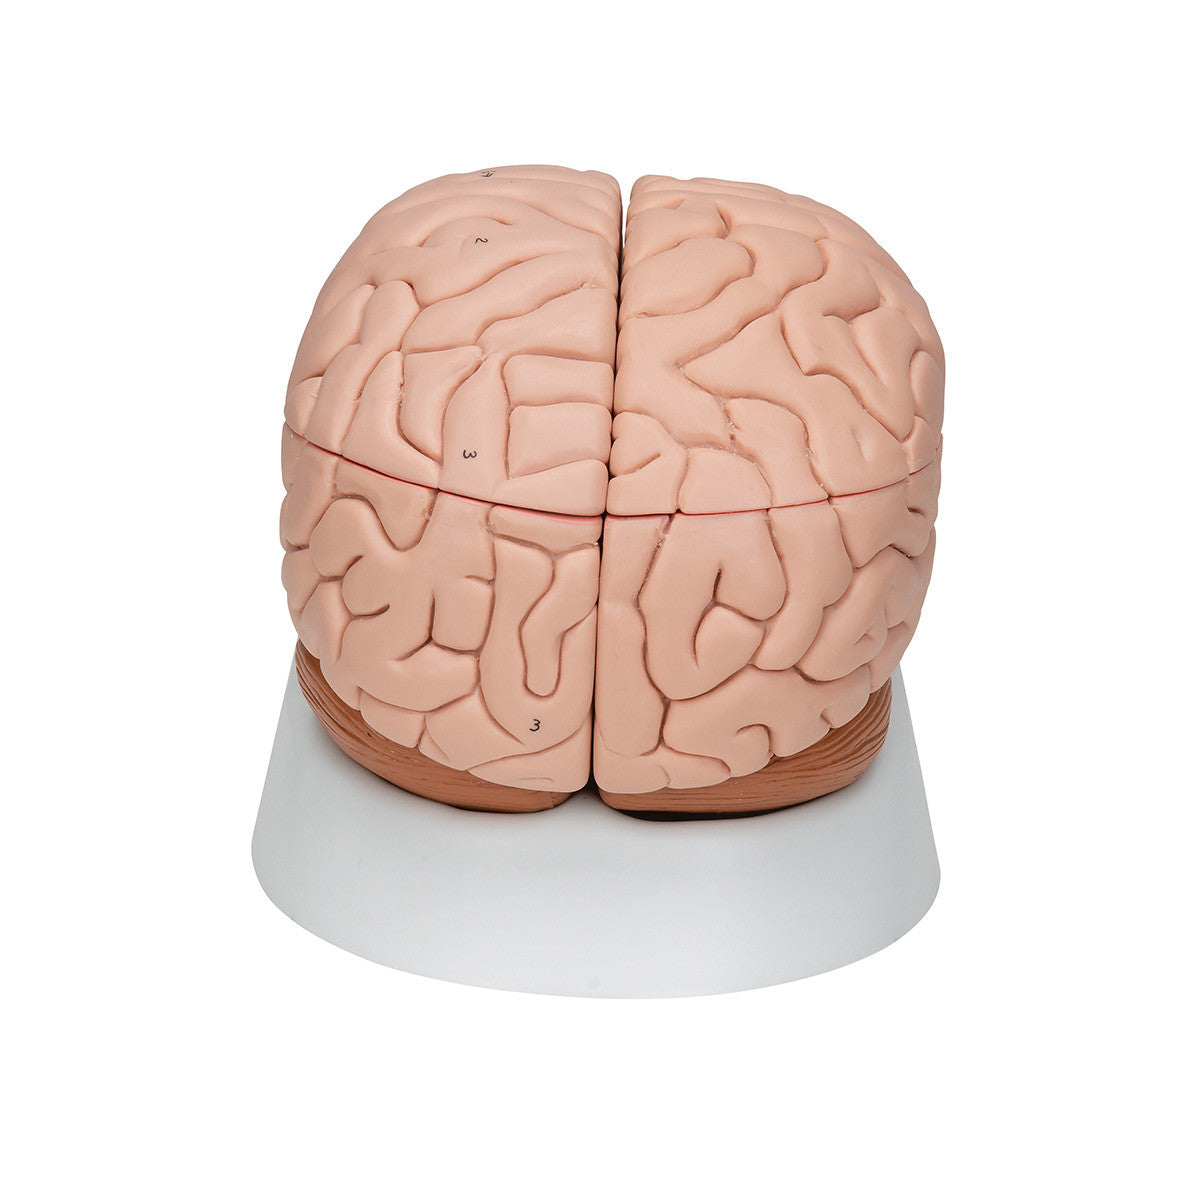 c17_04_1200_1200_human-brain-model-8-part-3b-smart-anatomy__48860.1589753205.1280.1280.jpg